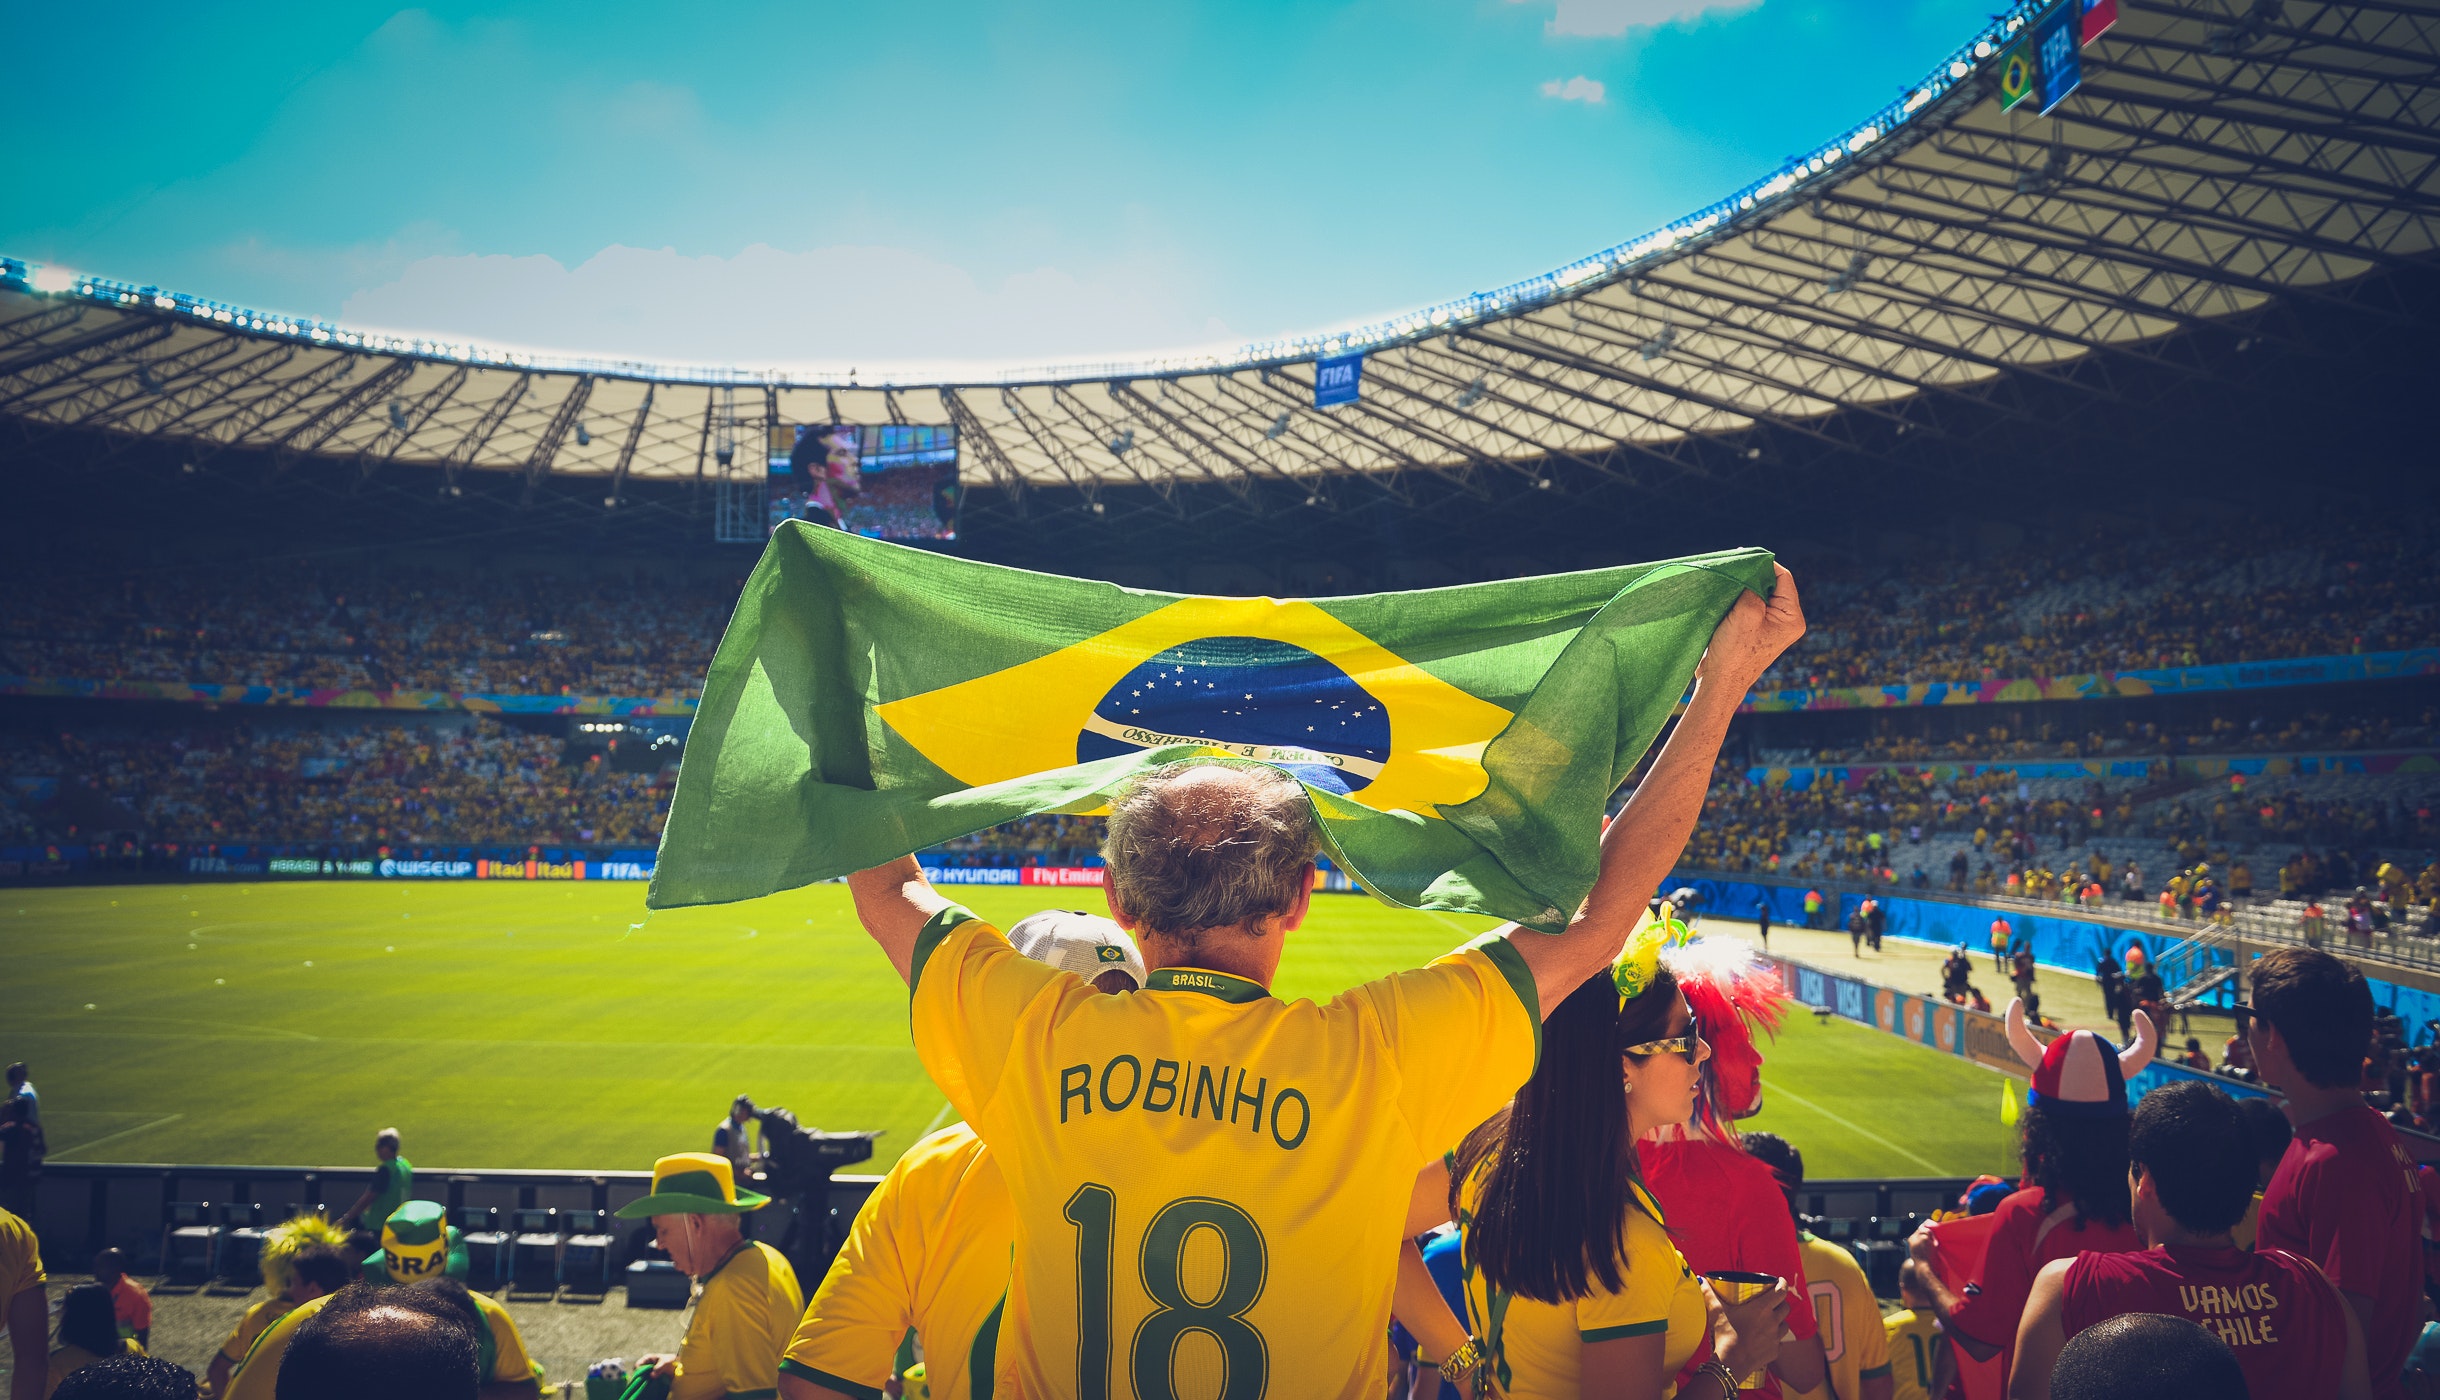 Brazil Flag Hd Wallpapers